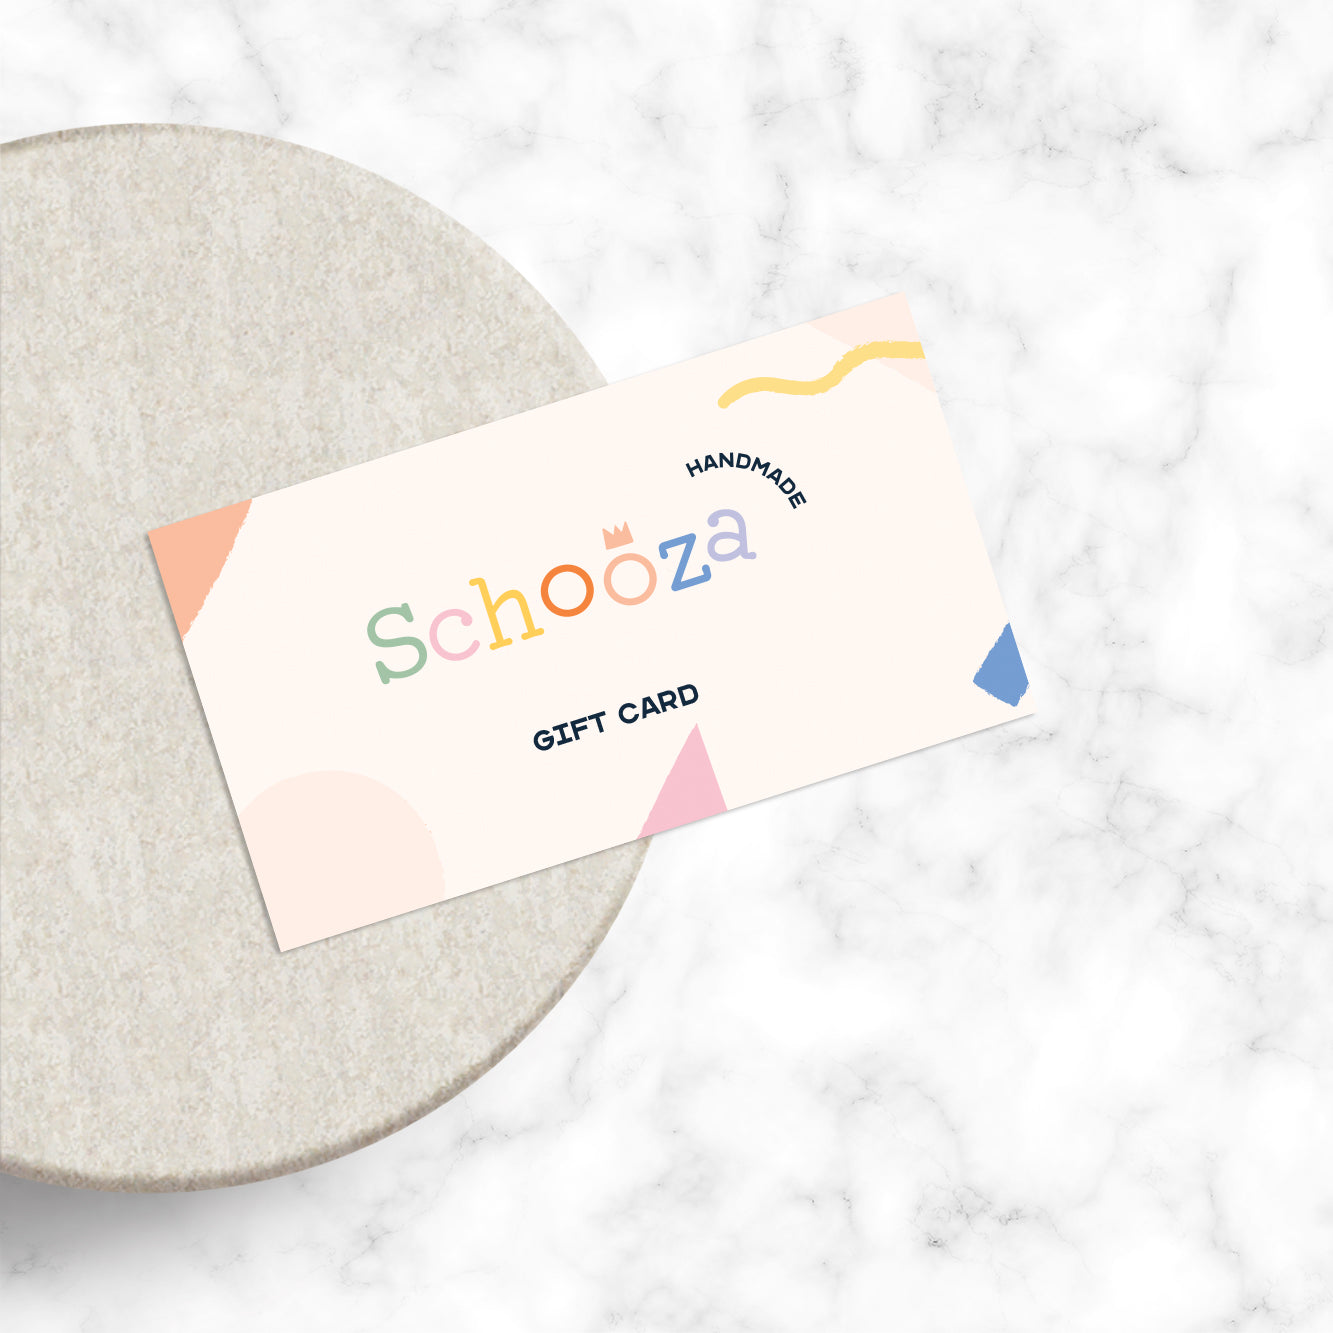 Schooza Gift Card